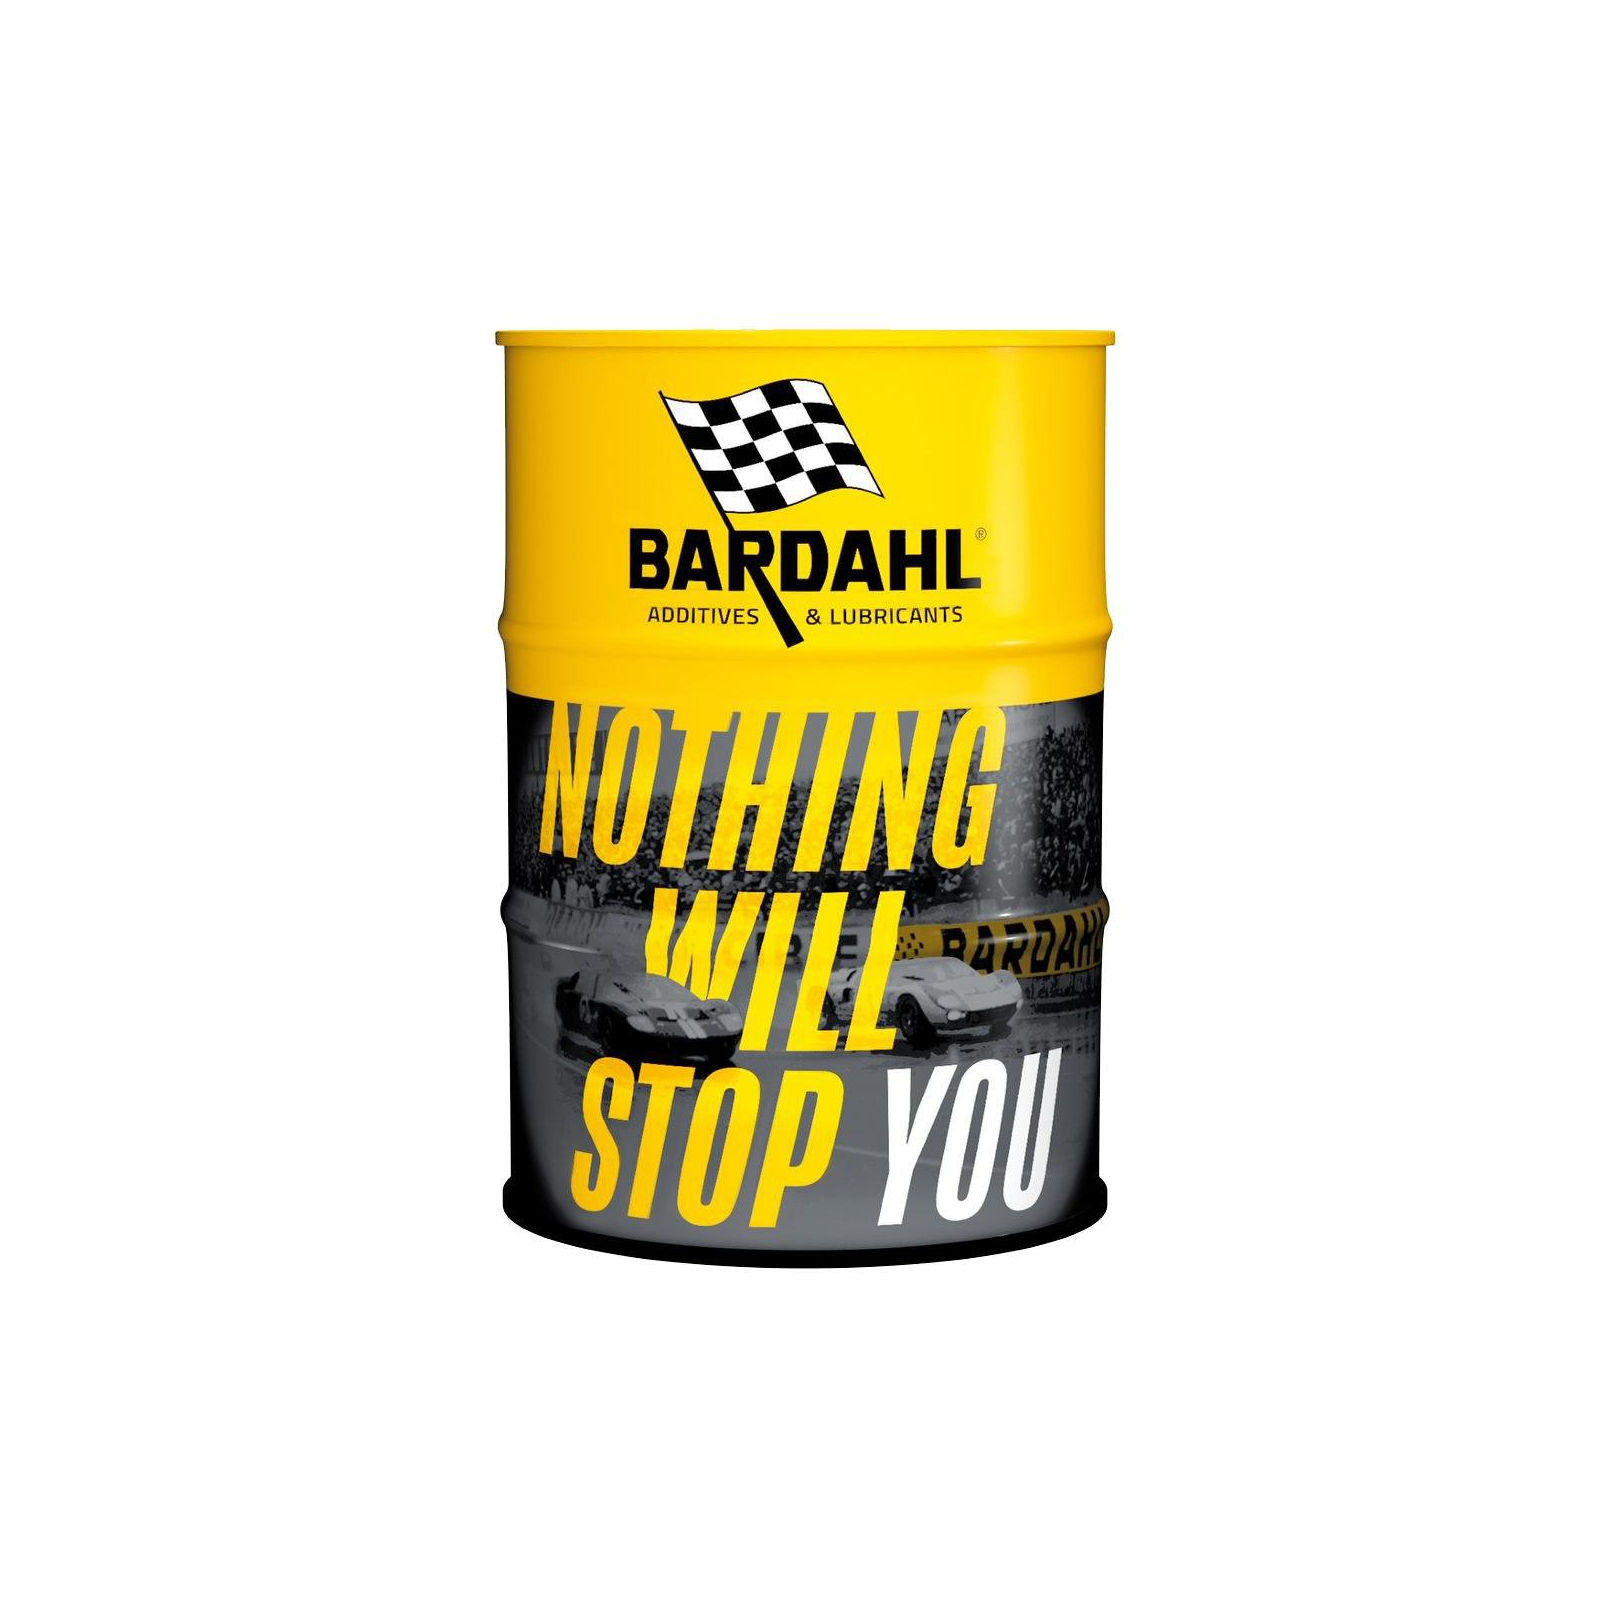 Моторное масло BARDAHL XTEC 5W30 C3 4л (36302)